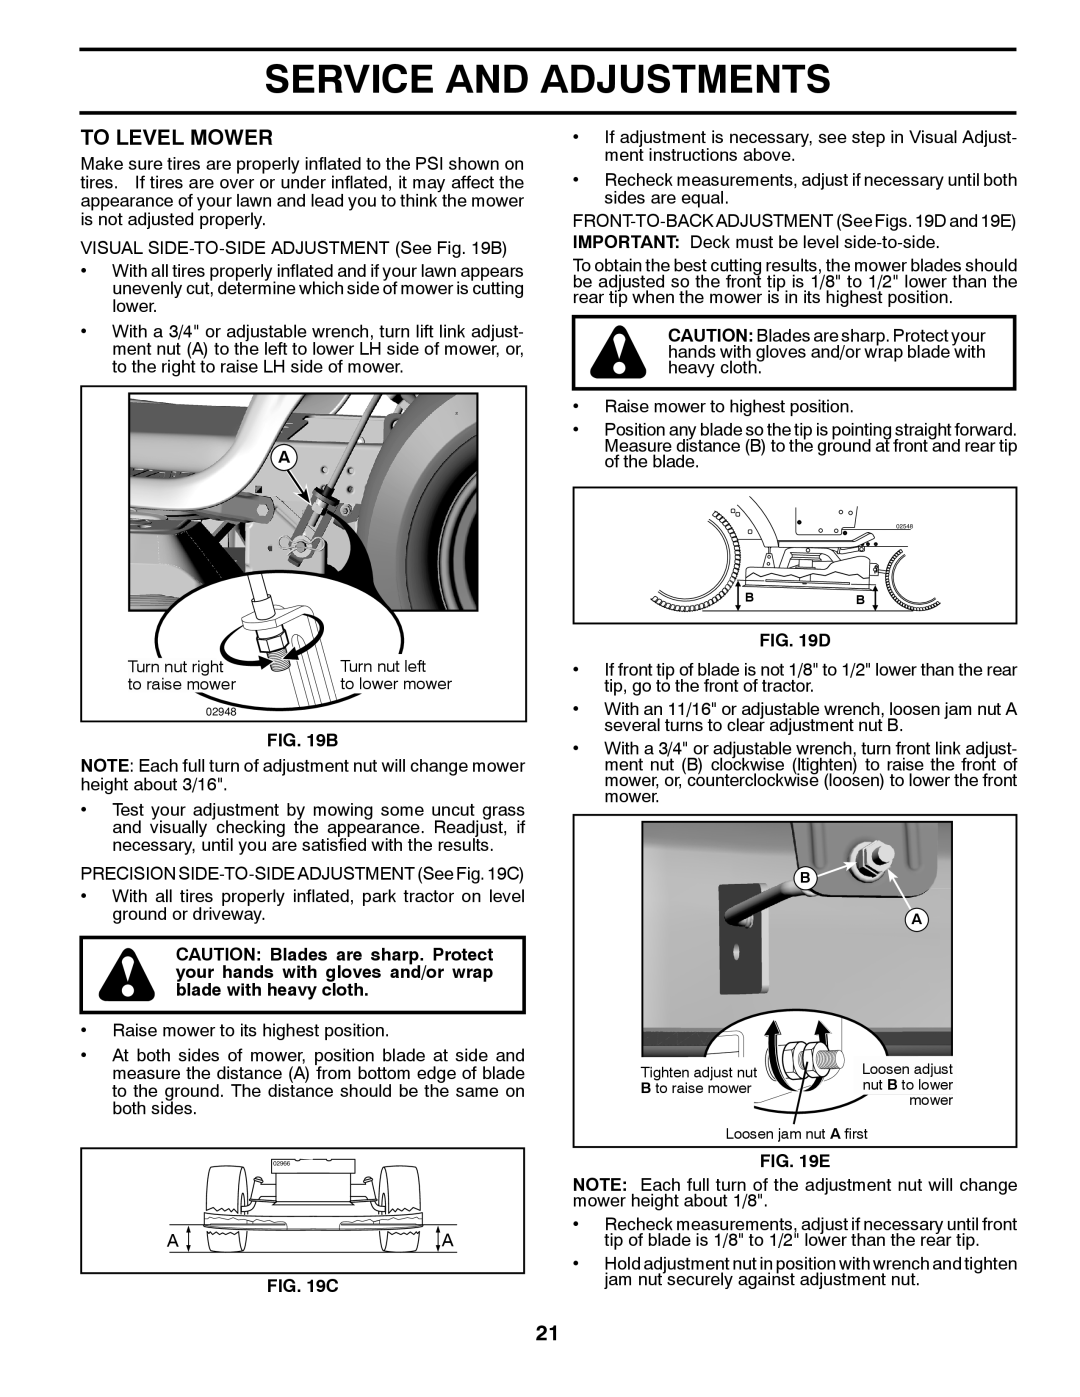 Husqvarna LTH1742TWIN manual To Level Mower, Service And Adjustments, B, C, D, E 